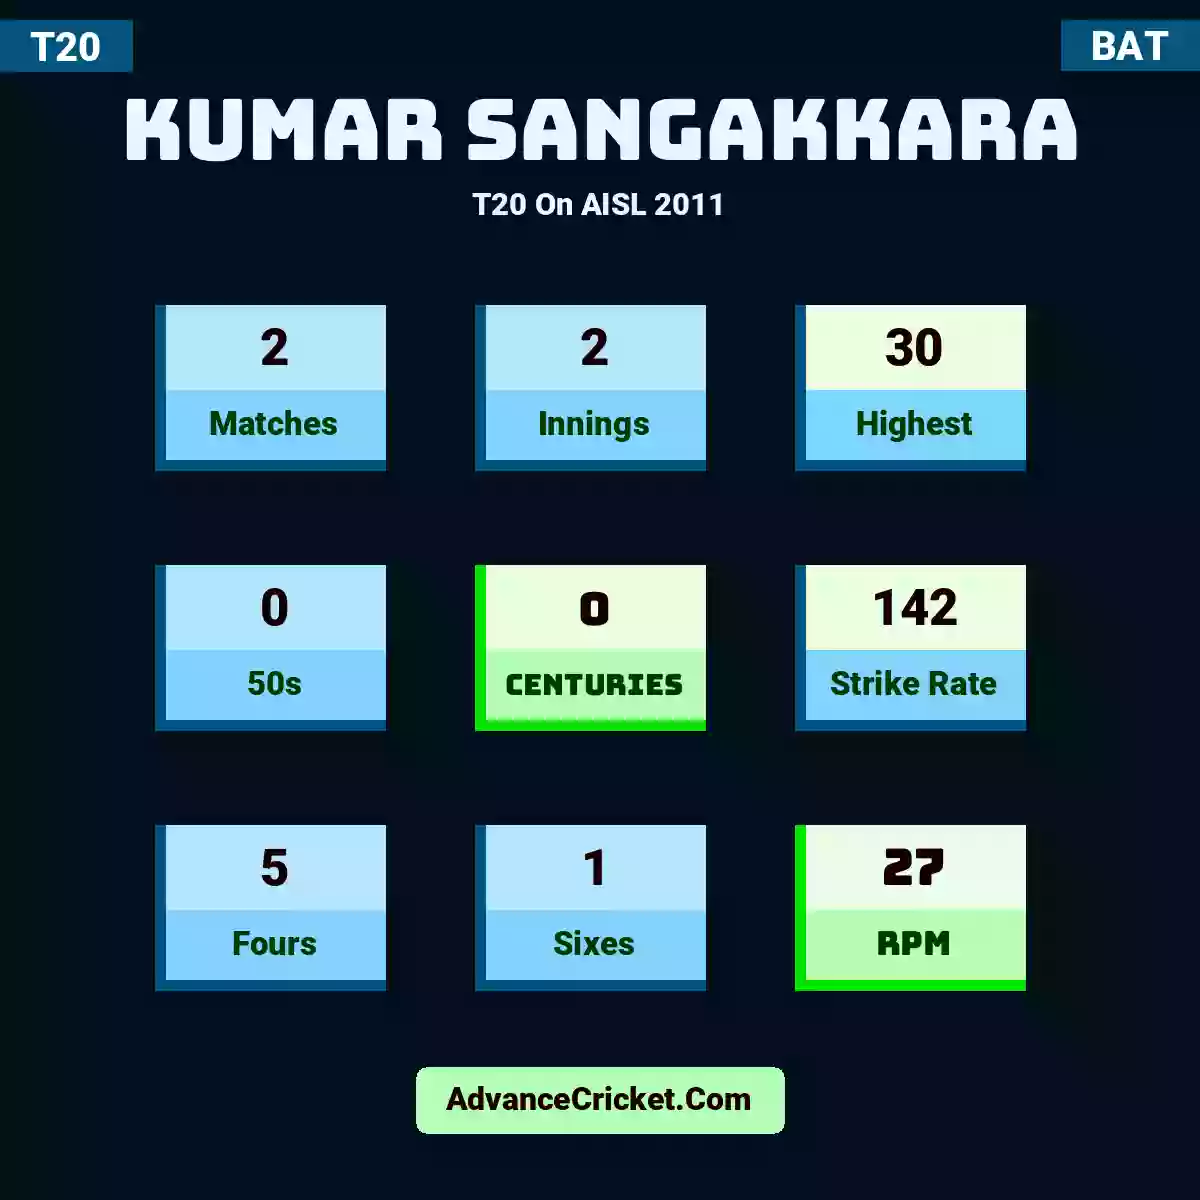 Kumar Sangakkara T20  On AISL 2011, Kumar Sangakkara played 2 matches, scored 30 runs as highest, 0 half-centuries, and 0 centuries, with a strike rate of 142. K.Sangakkara hit 5 fours and 1 sixes, with an RPM of 27.